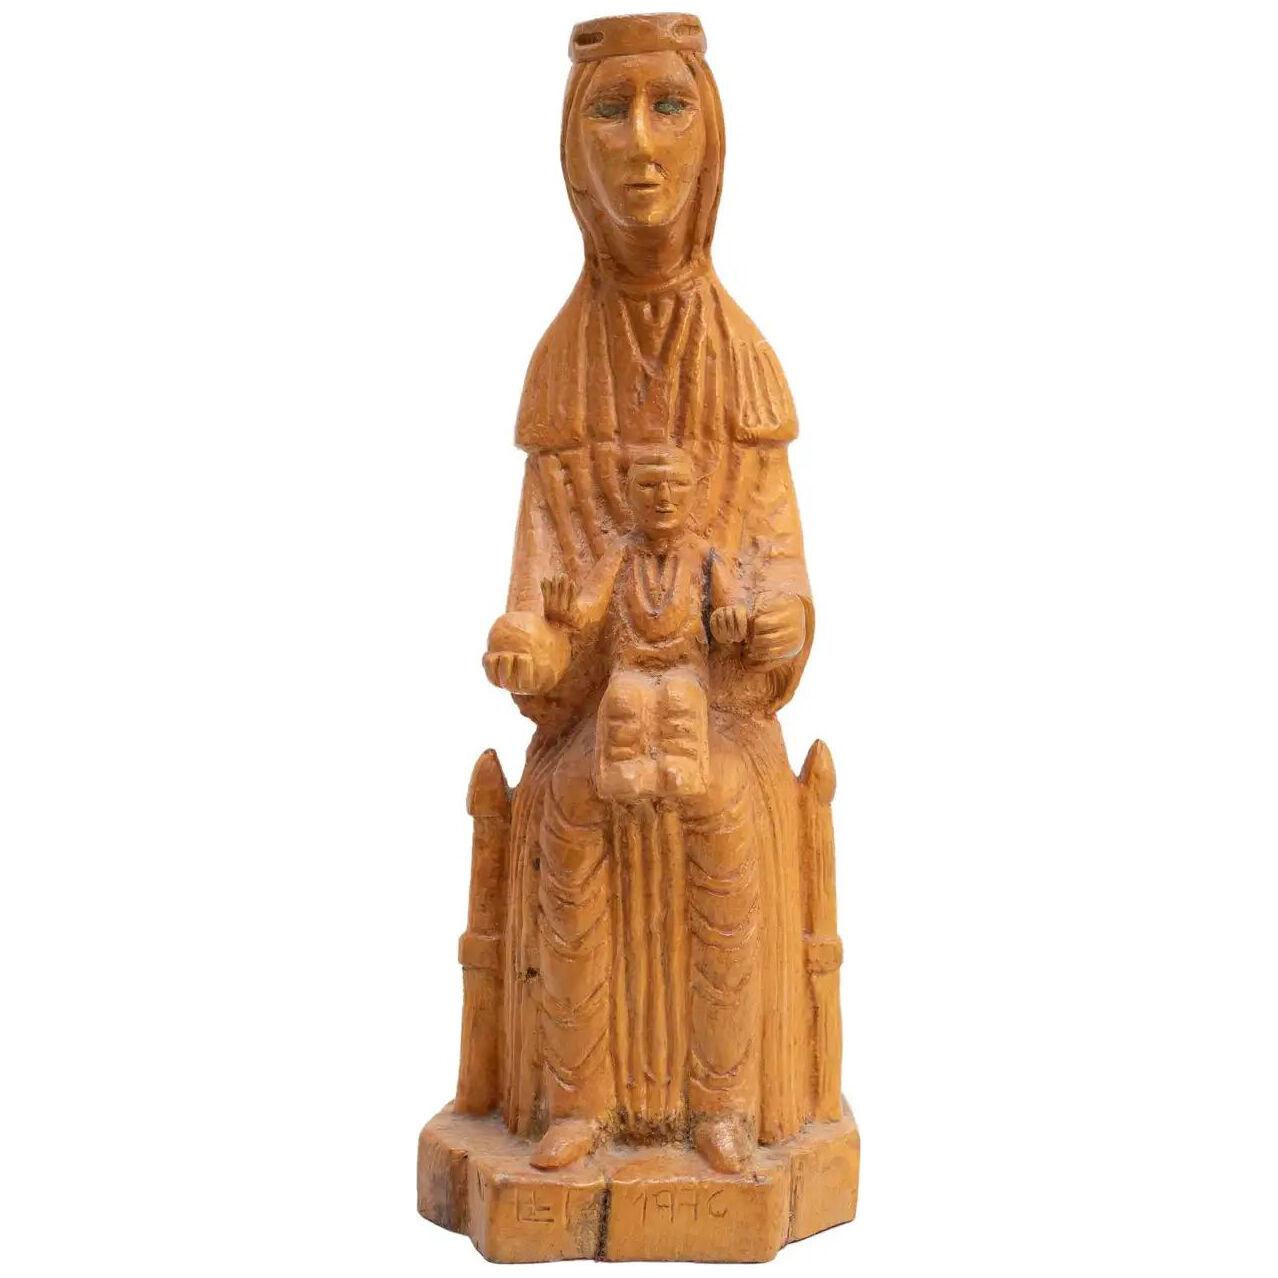 Traditional Catalan Religious Virgin "La Moreneta" Wooden Sculpture